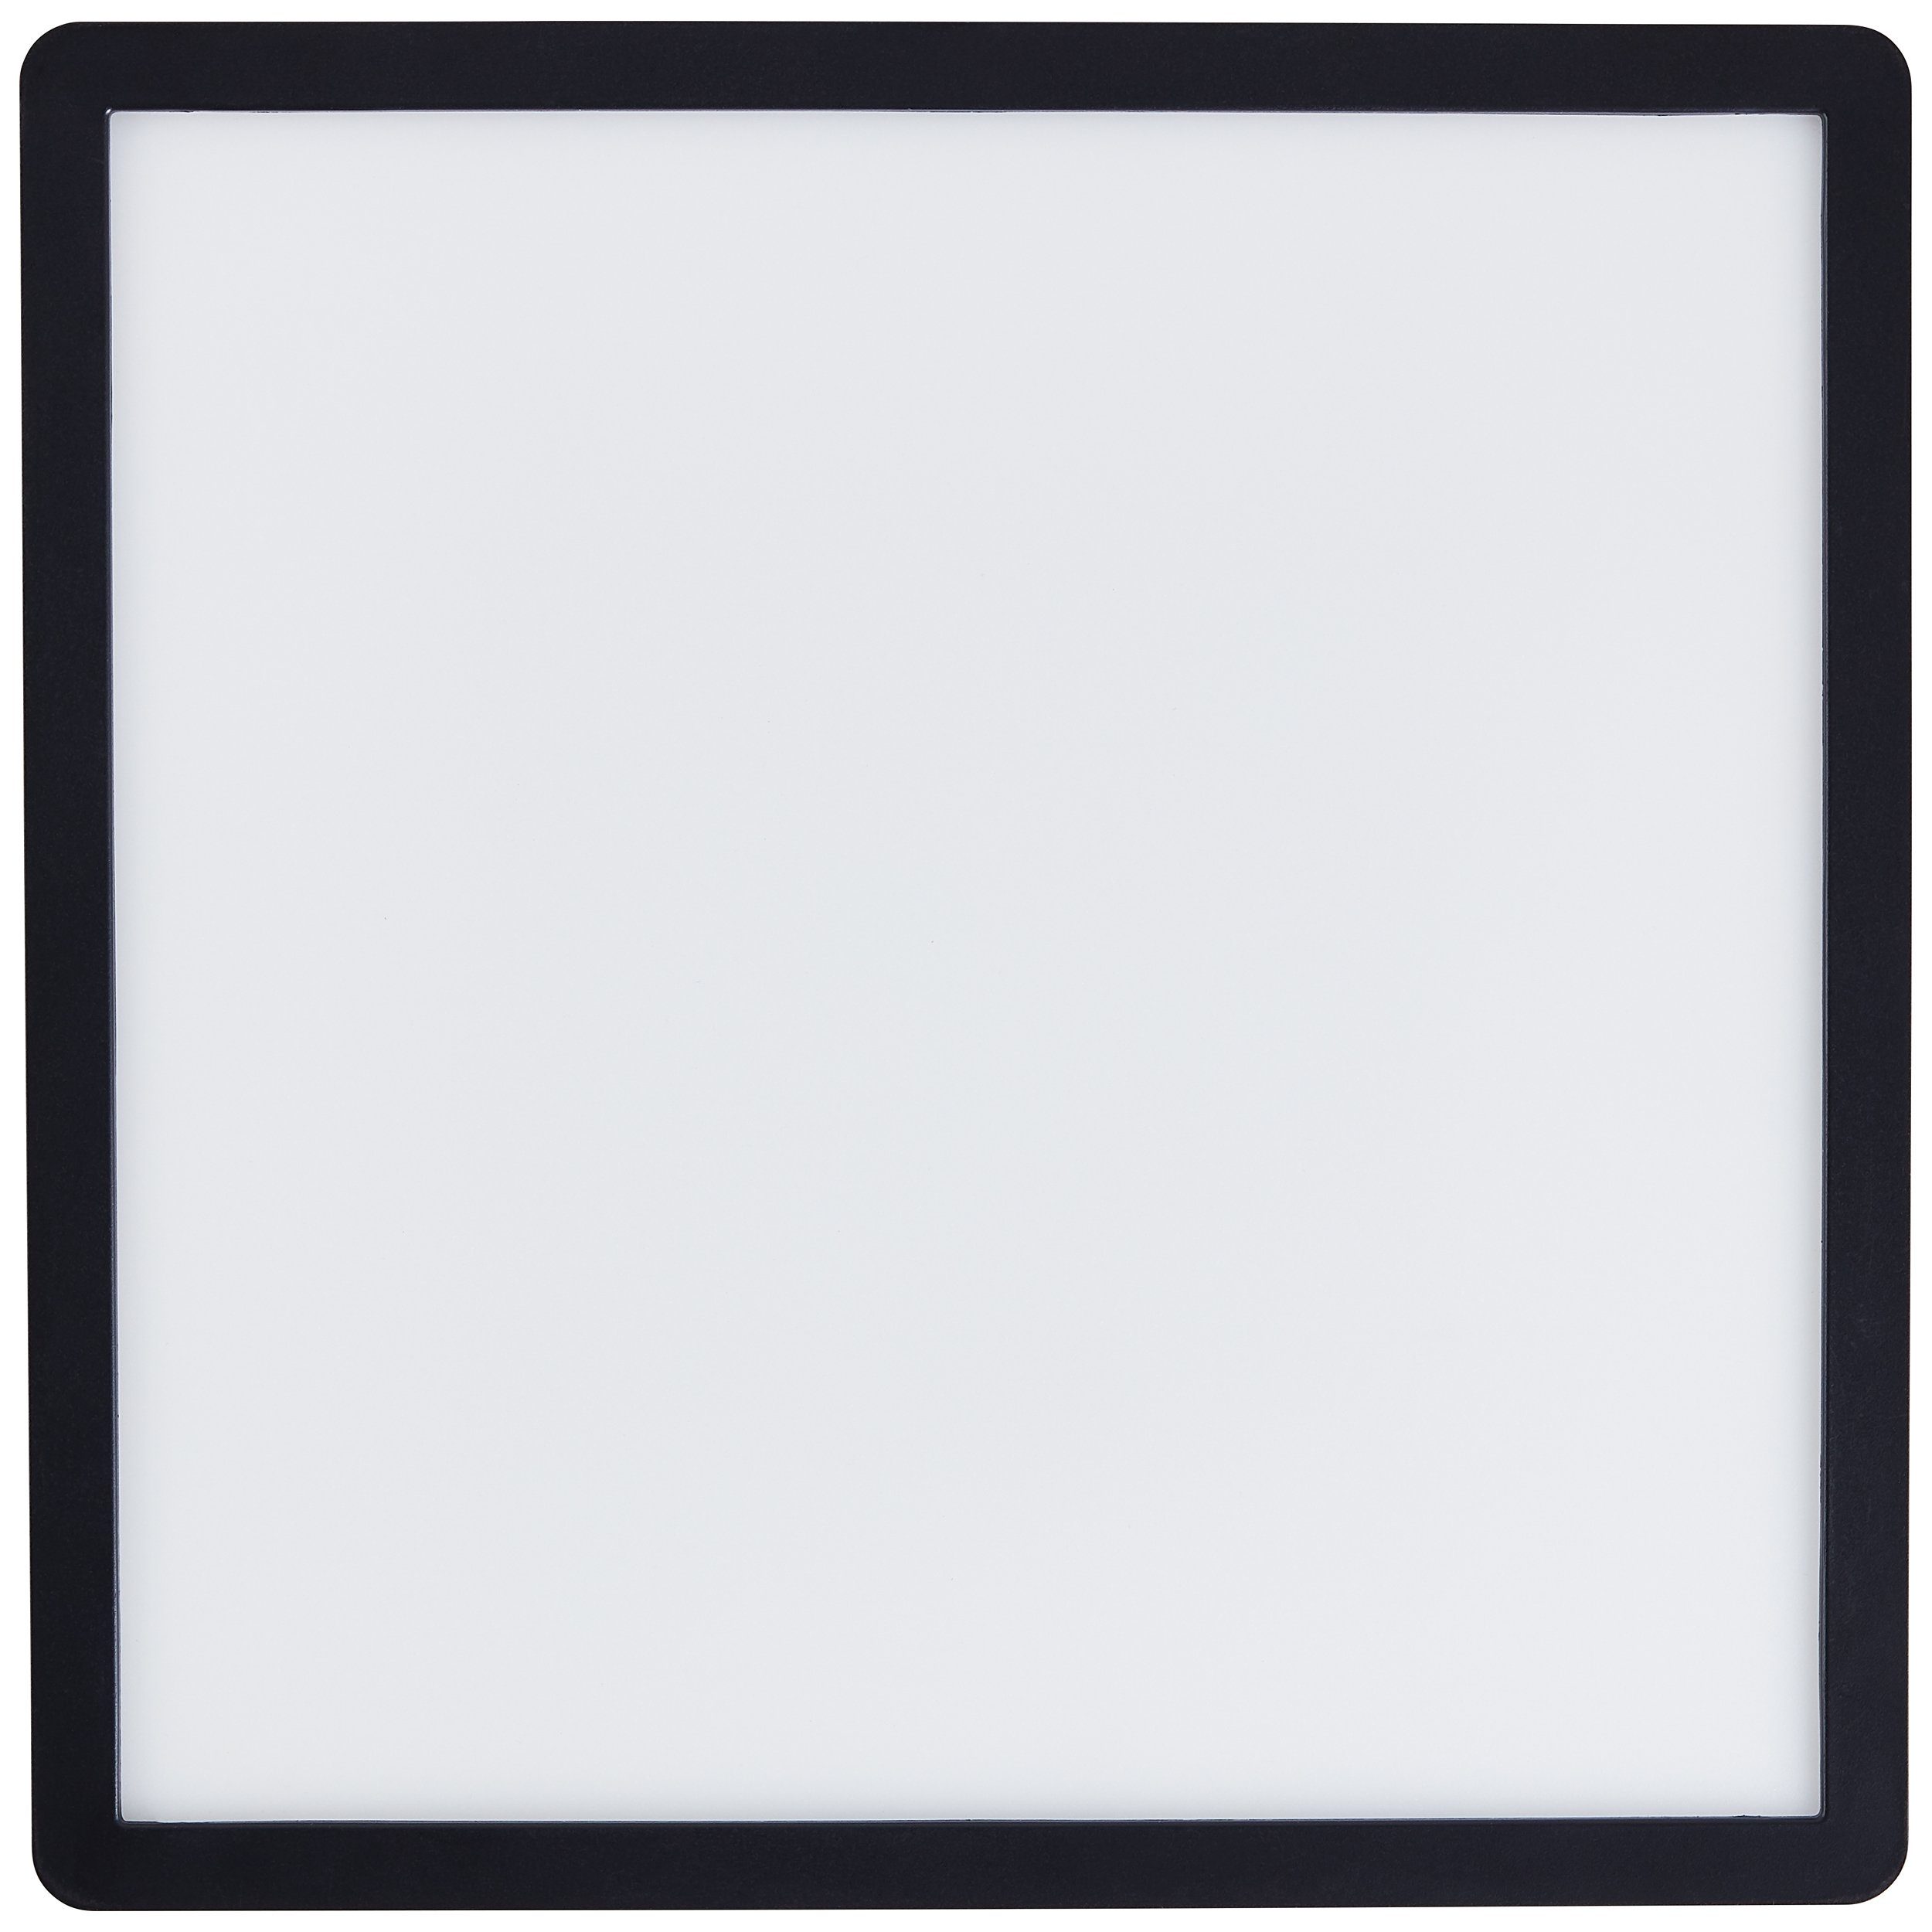 Kunststo 29x29cm BRE-Light 29x29cm schwarz/weiß Sorell Deckenaufbau-Paneel LED Deckenaufbau-Paneel schwarz/weiß, Aufbauleuchte Sorell Brilliant LED